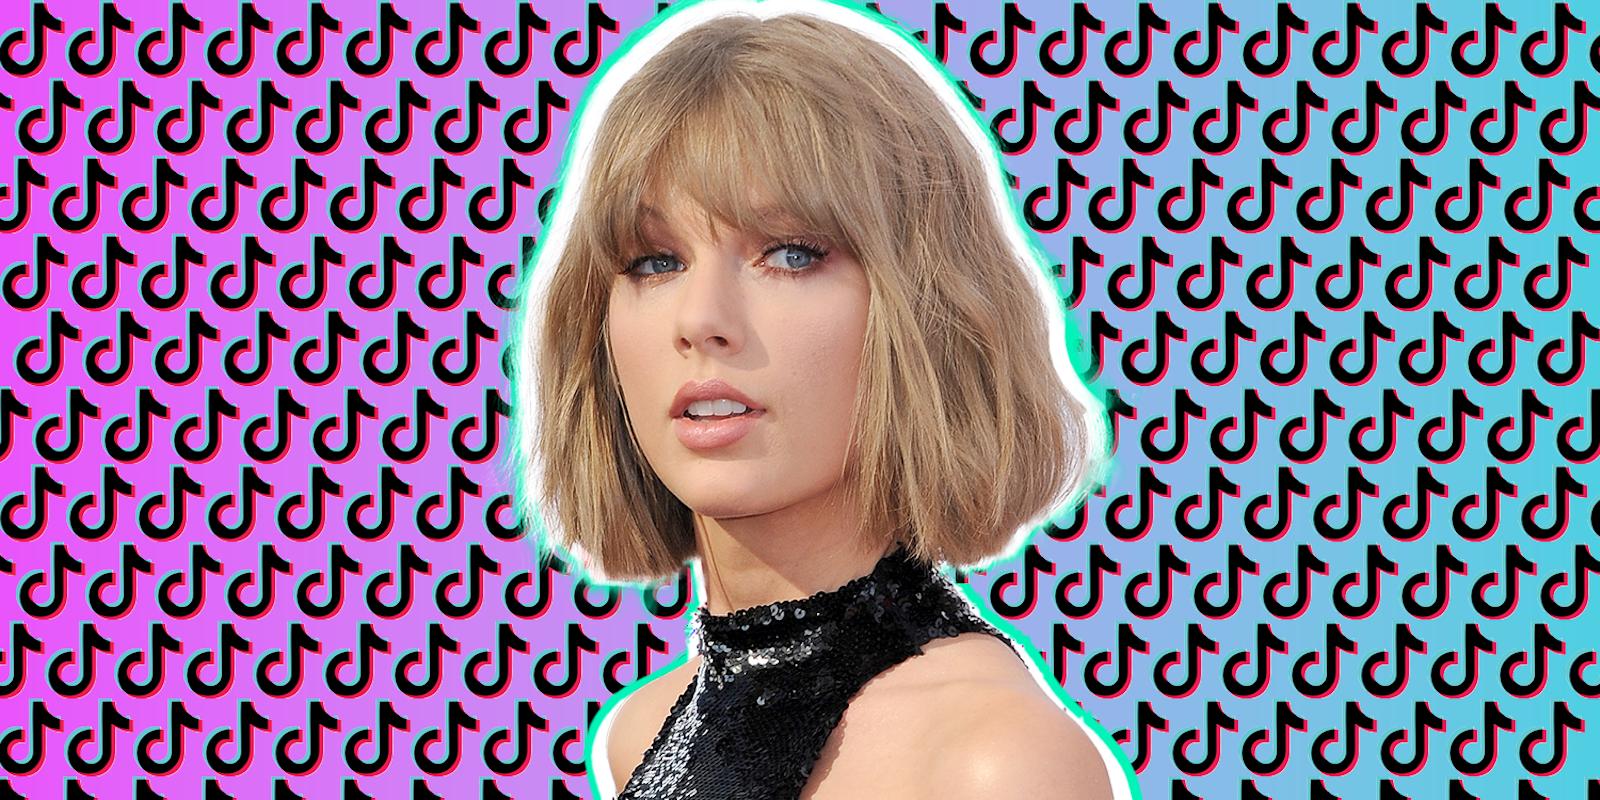 Taylor Swift's Music Has Returned To TikTok